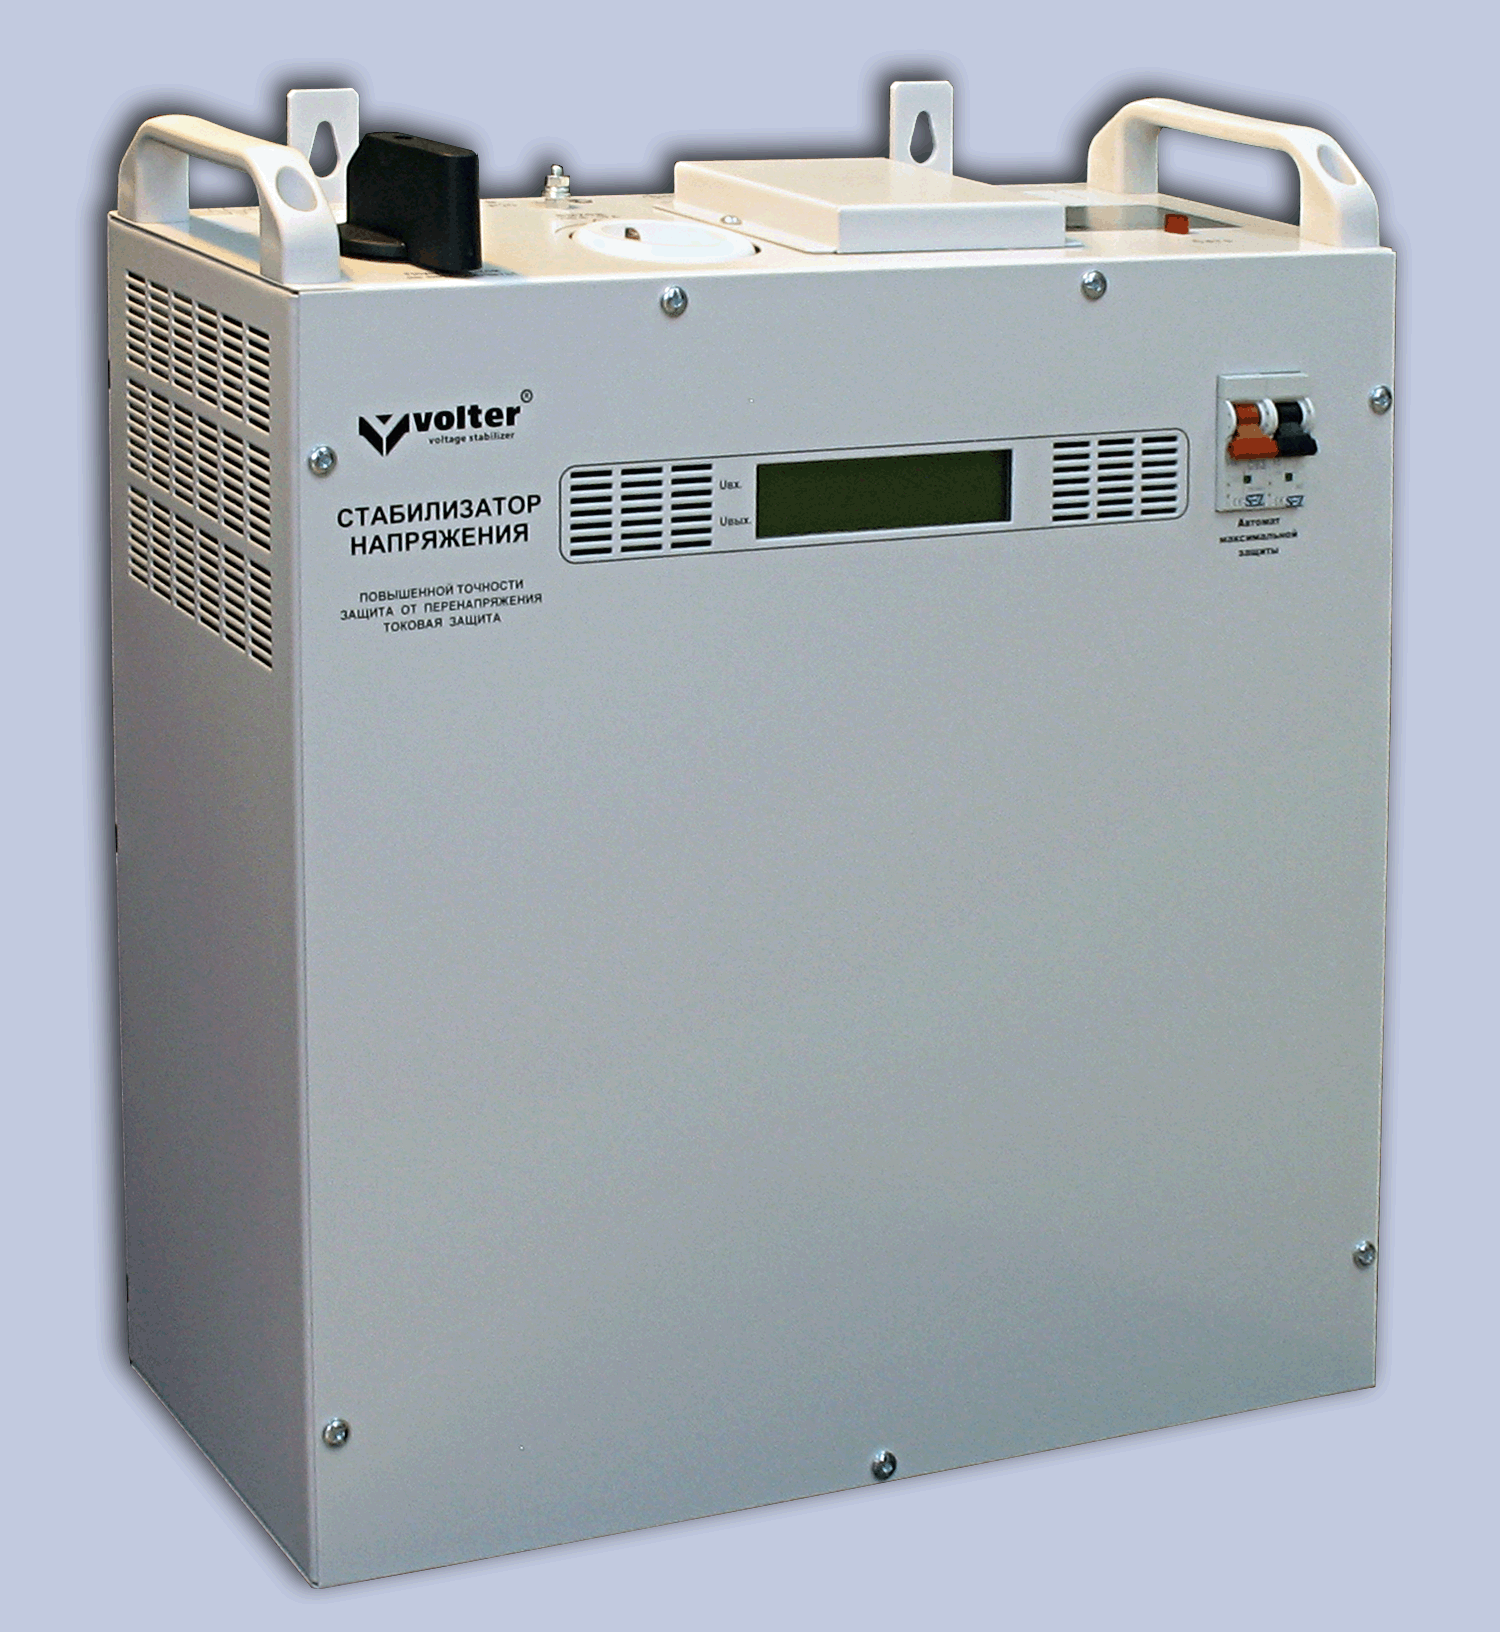 Стабилизатор 1-фазный СНПТО- 7 пттм, мощность 7кВт, размеры 350х420х160, масса 21кг -0.5% +0.5%